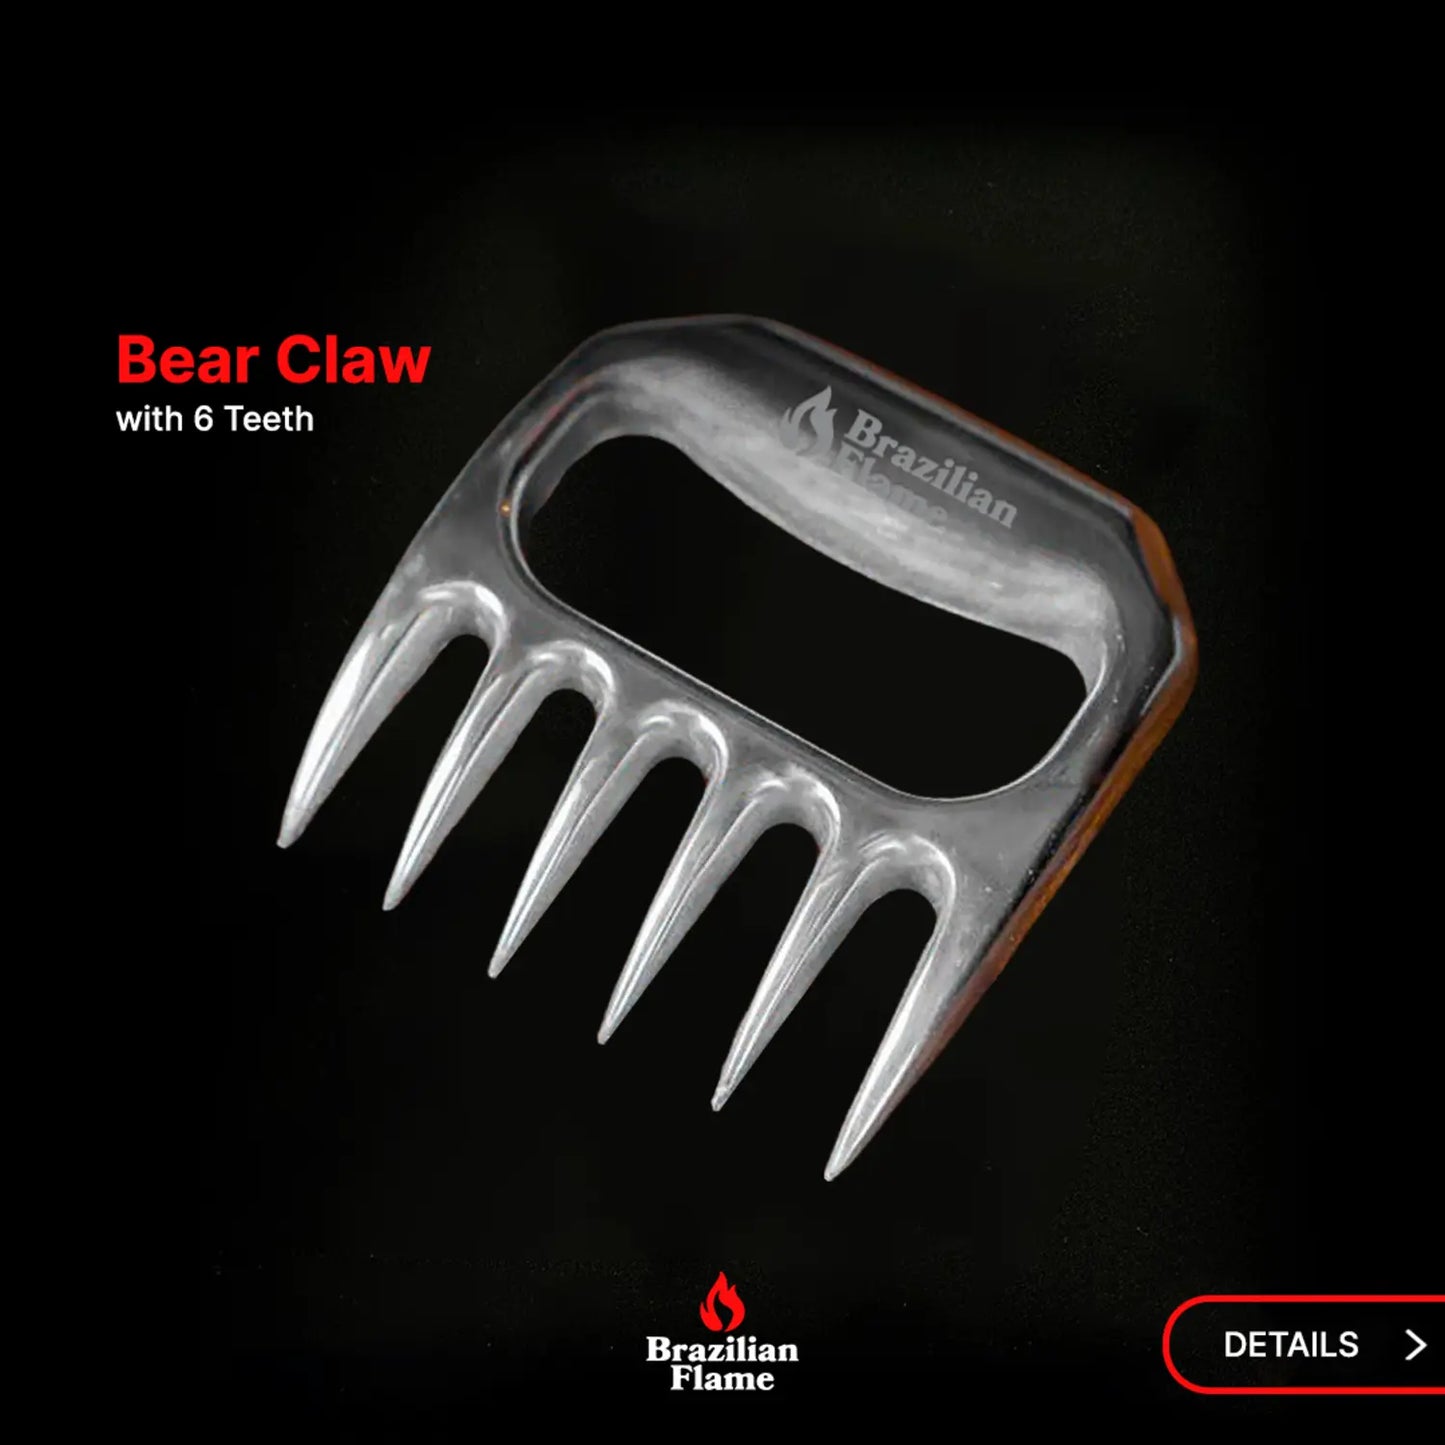 Brazilian Flame Meat Shredder Claw - Bear, 6 Long Teeth Fork